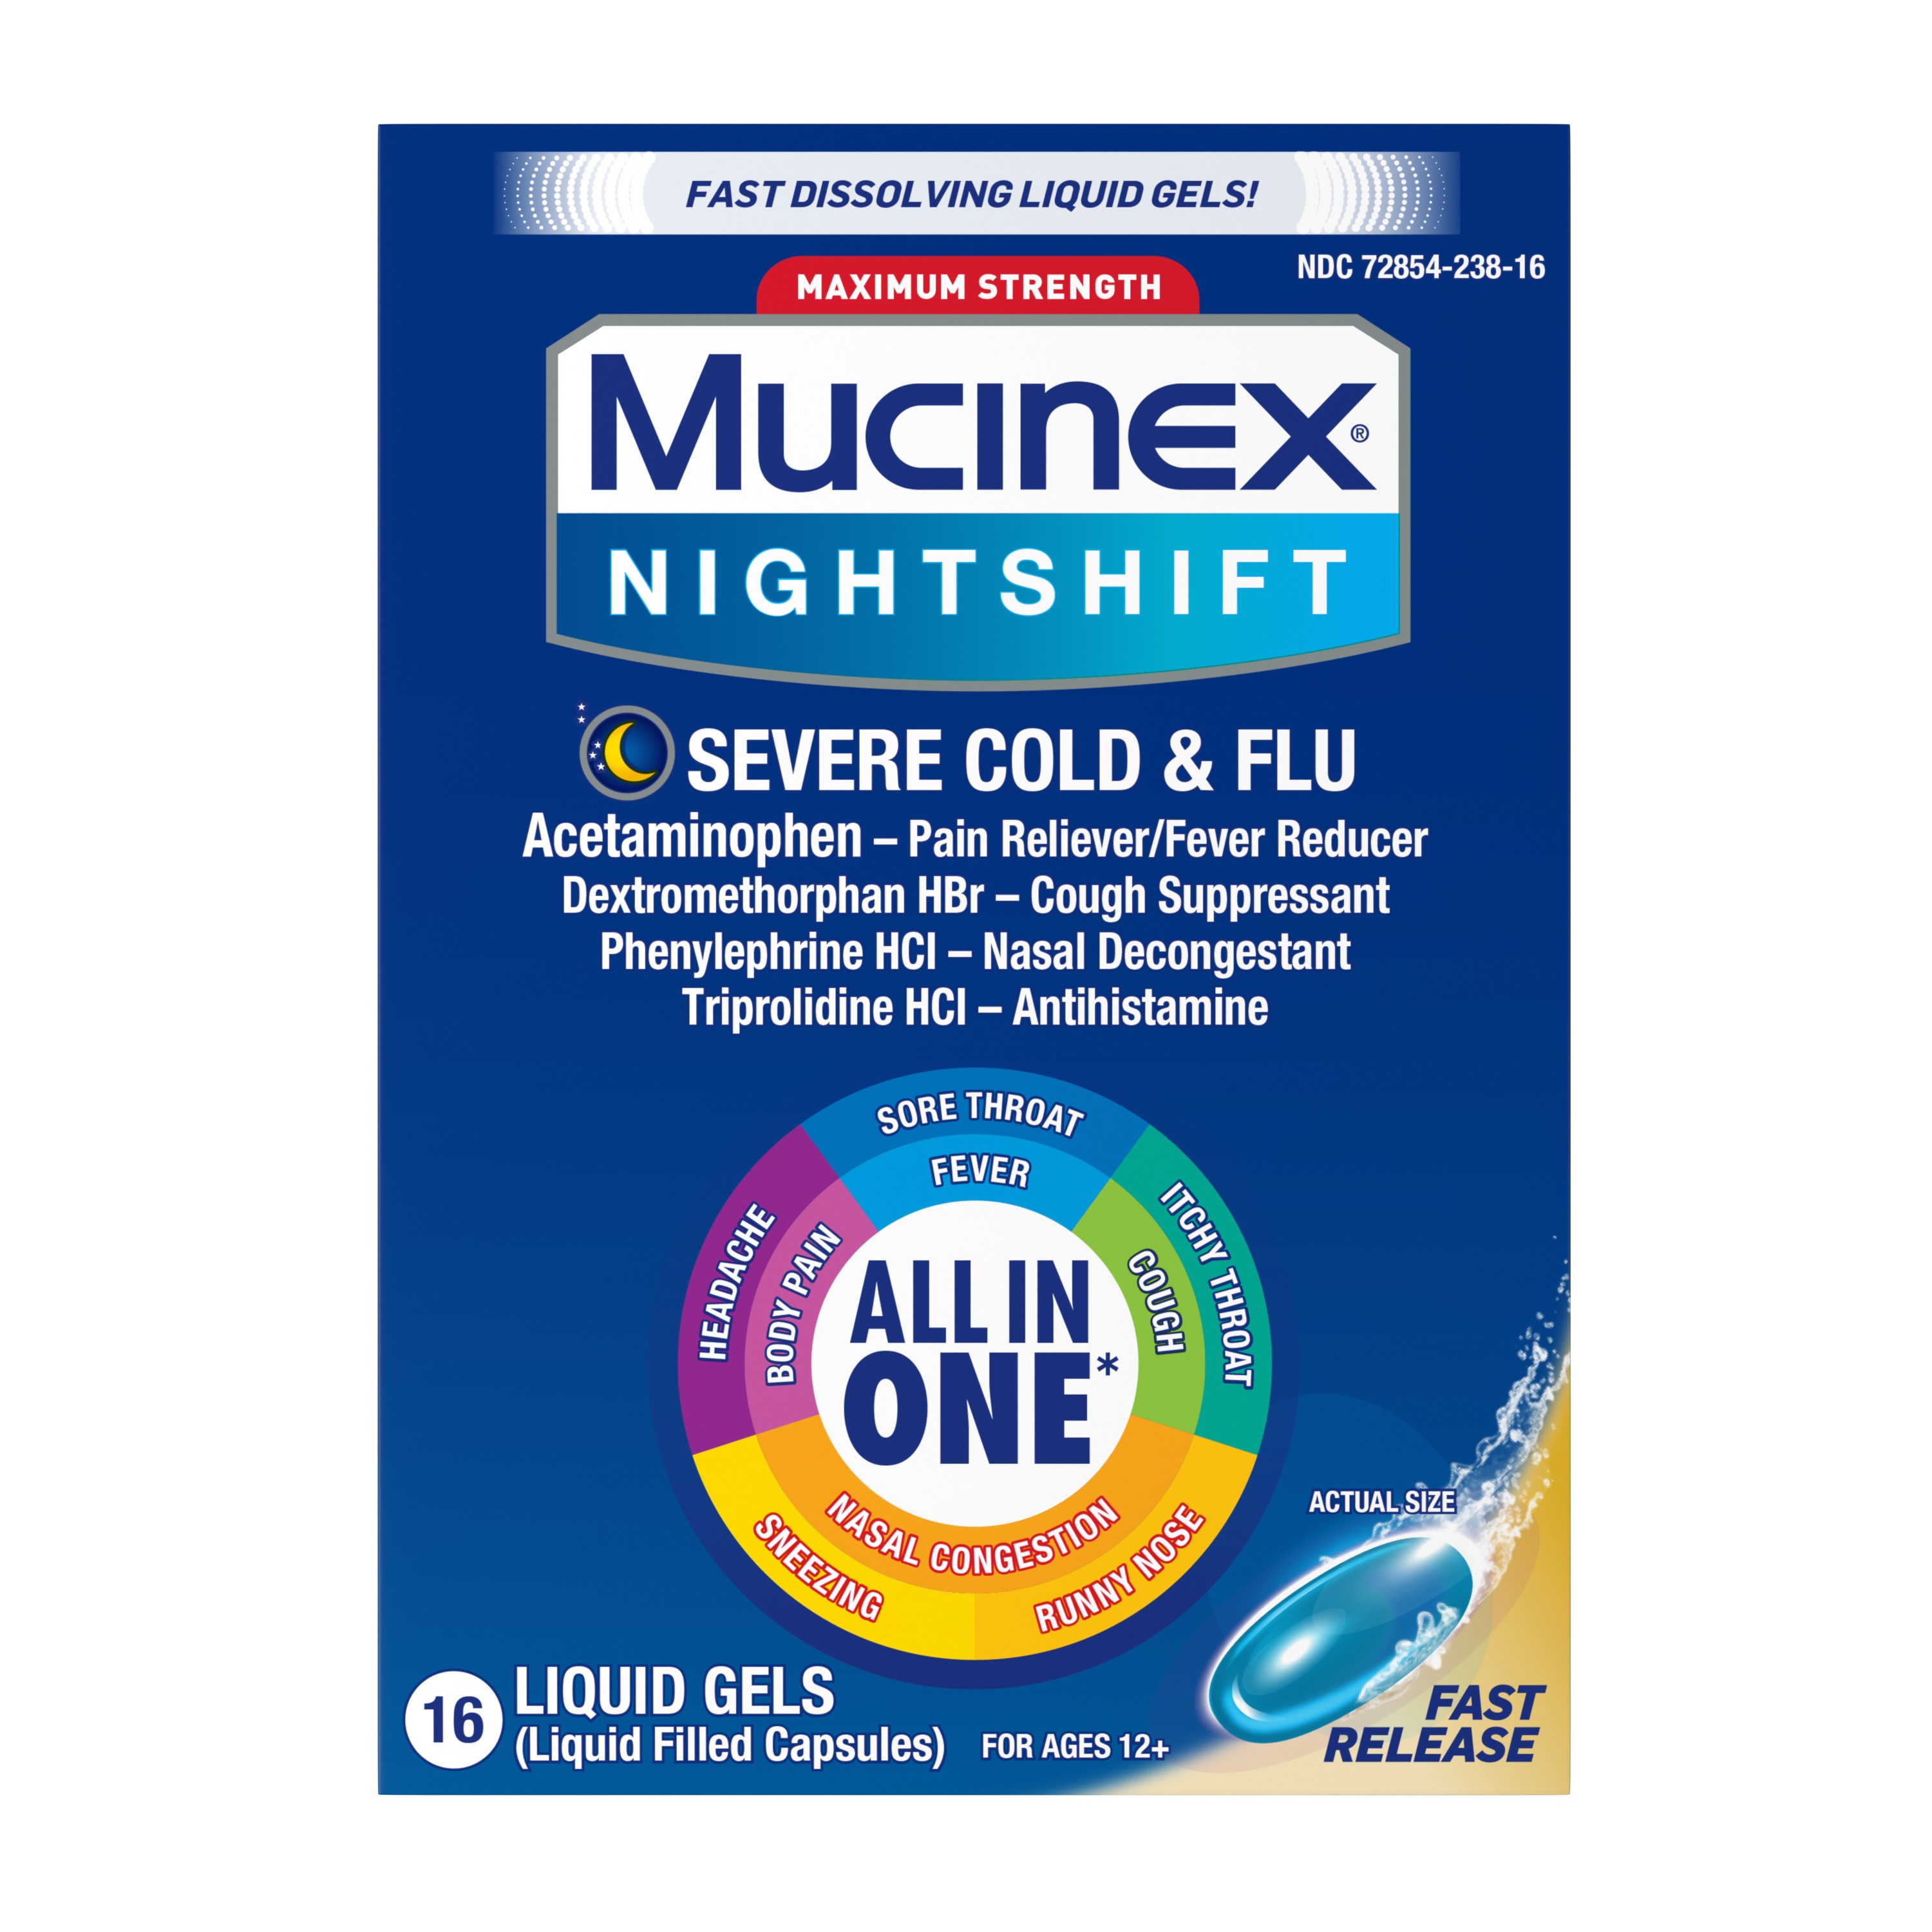 MUCINEX FASTMAX Nightshift Severe Cold  Flu Fast Release Liquid Gels Discontinued